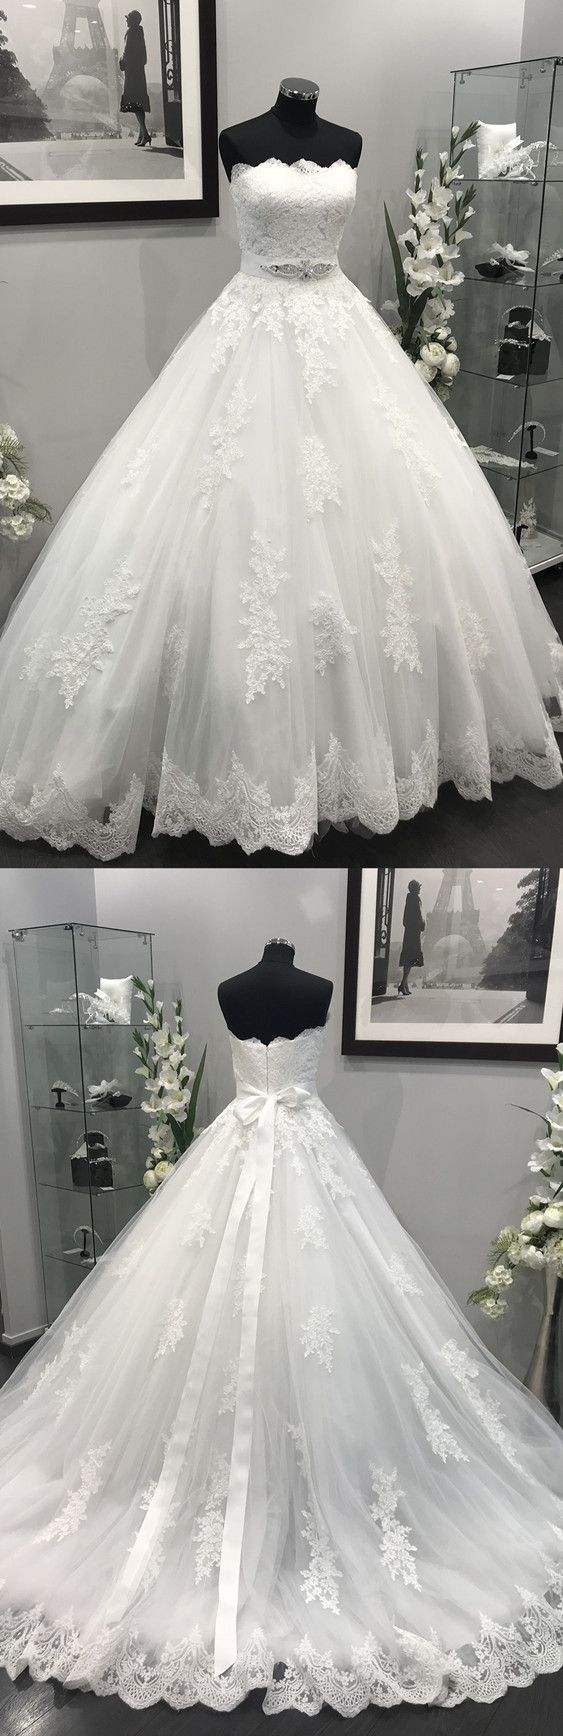 Sleeveless Ball Gown Wedding Dress With Removable Sash